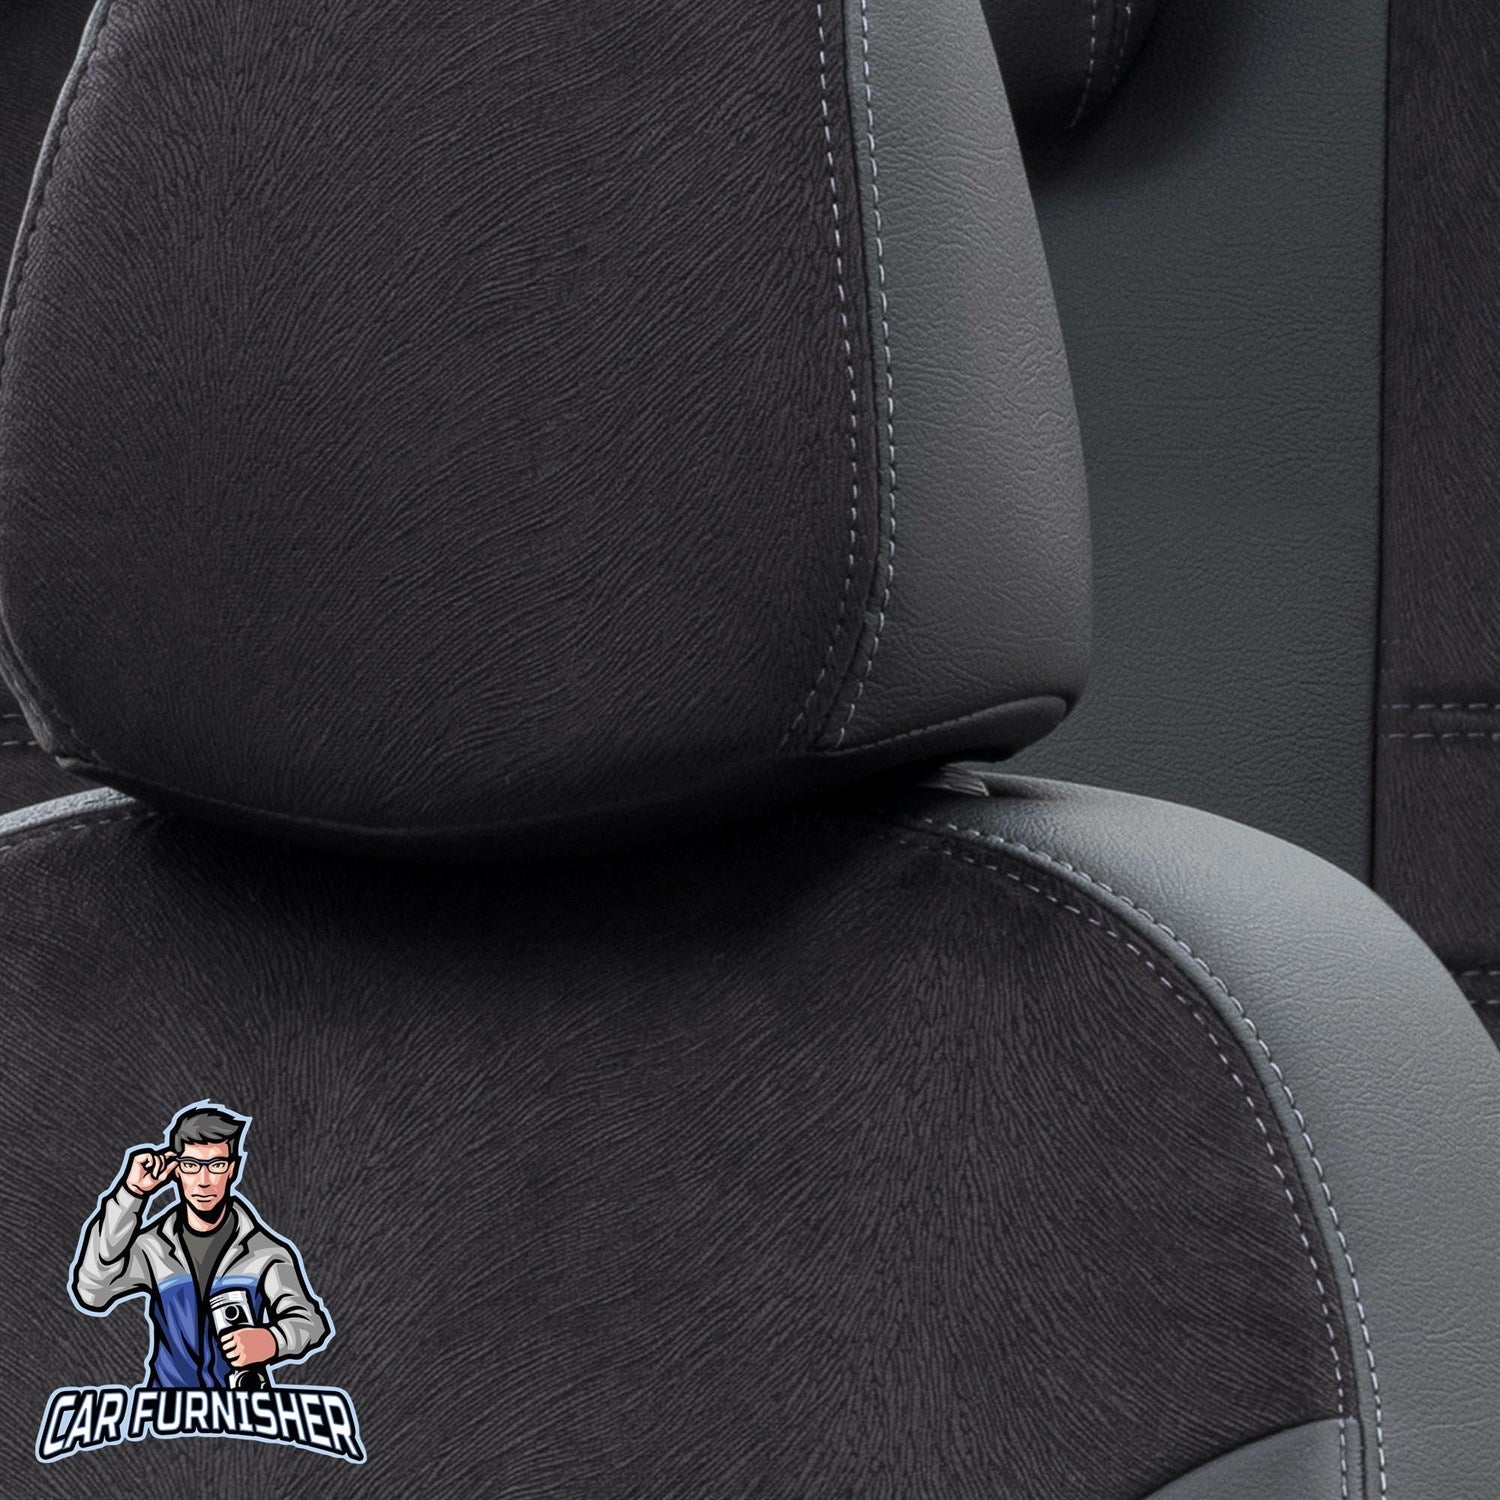 Chery Tiggo Seat Covers London Foal Feather Design Black Leather & Foal Feather